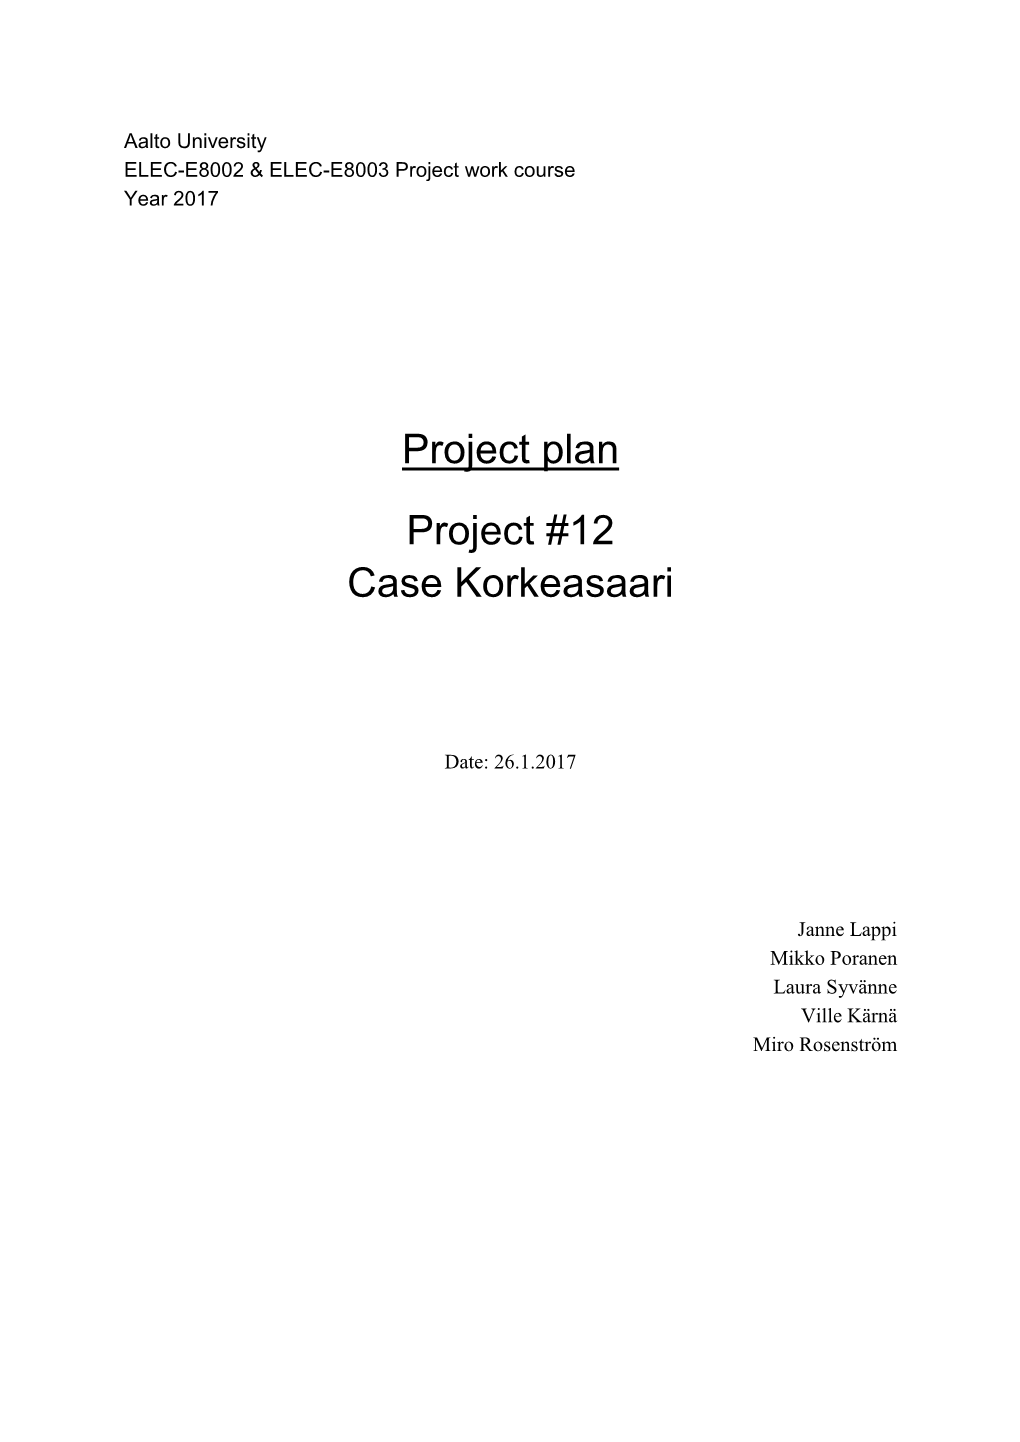 Project Plan Project #12 Case Korkeasaari